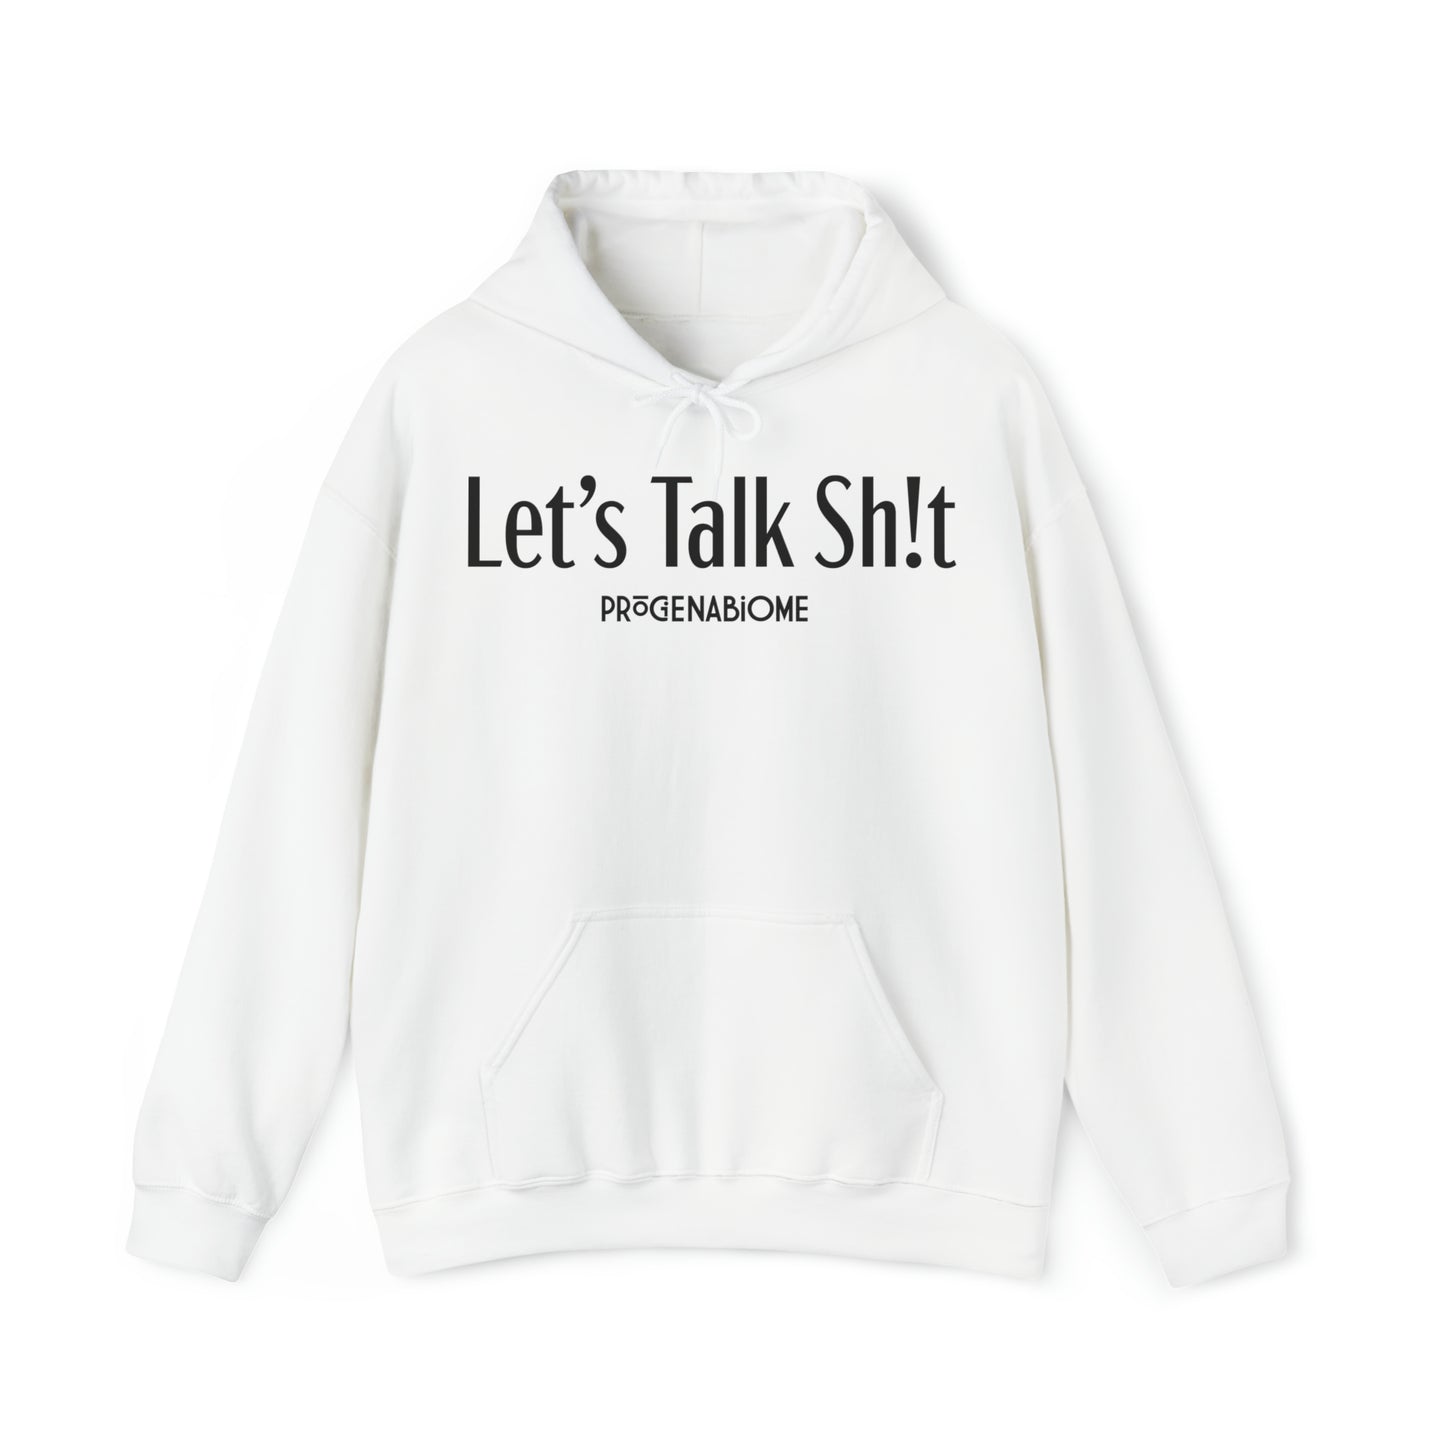 Let's Talk Sh!t Straightline Hooded Sweatshirt